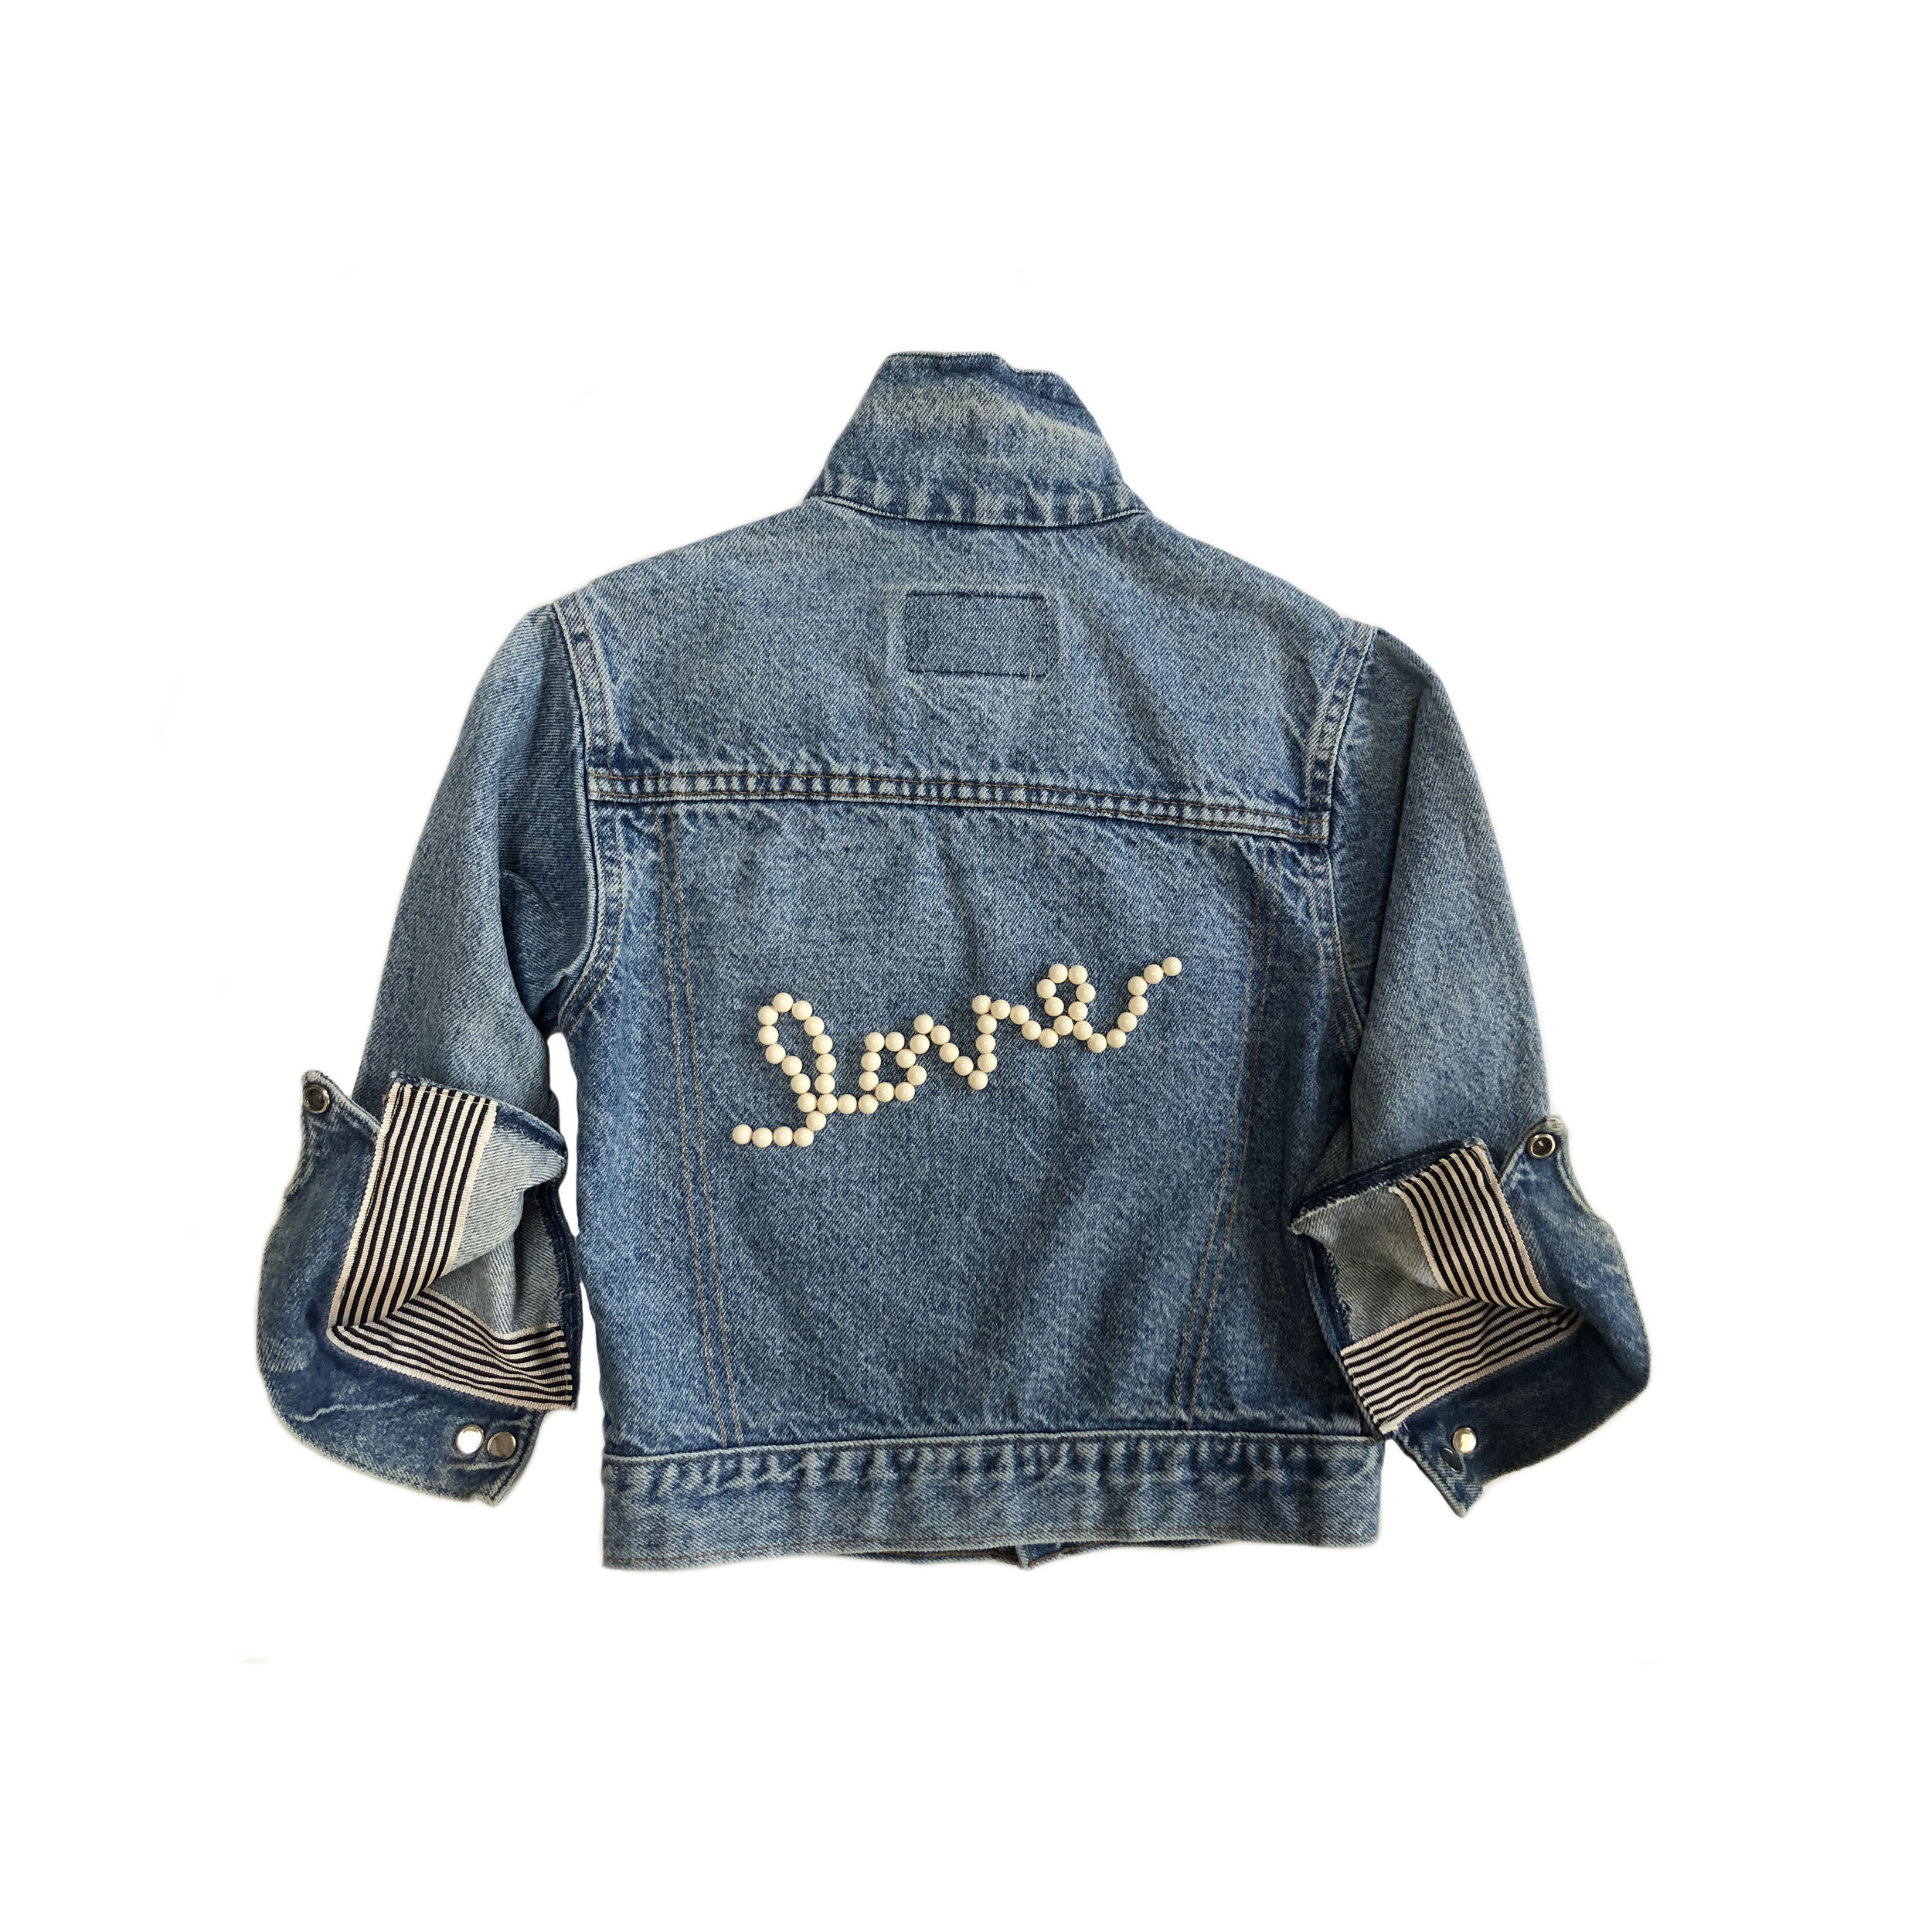 levi's custom denim jacket